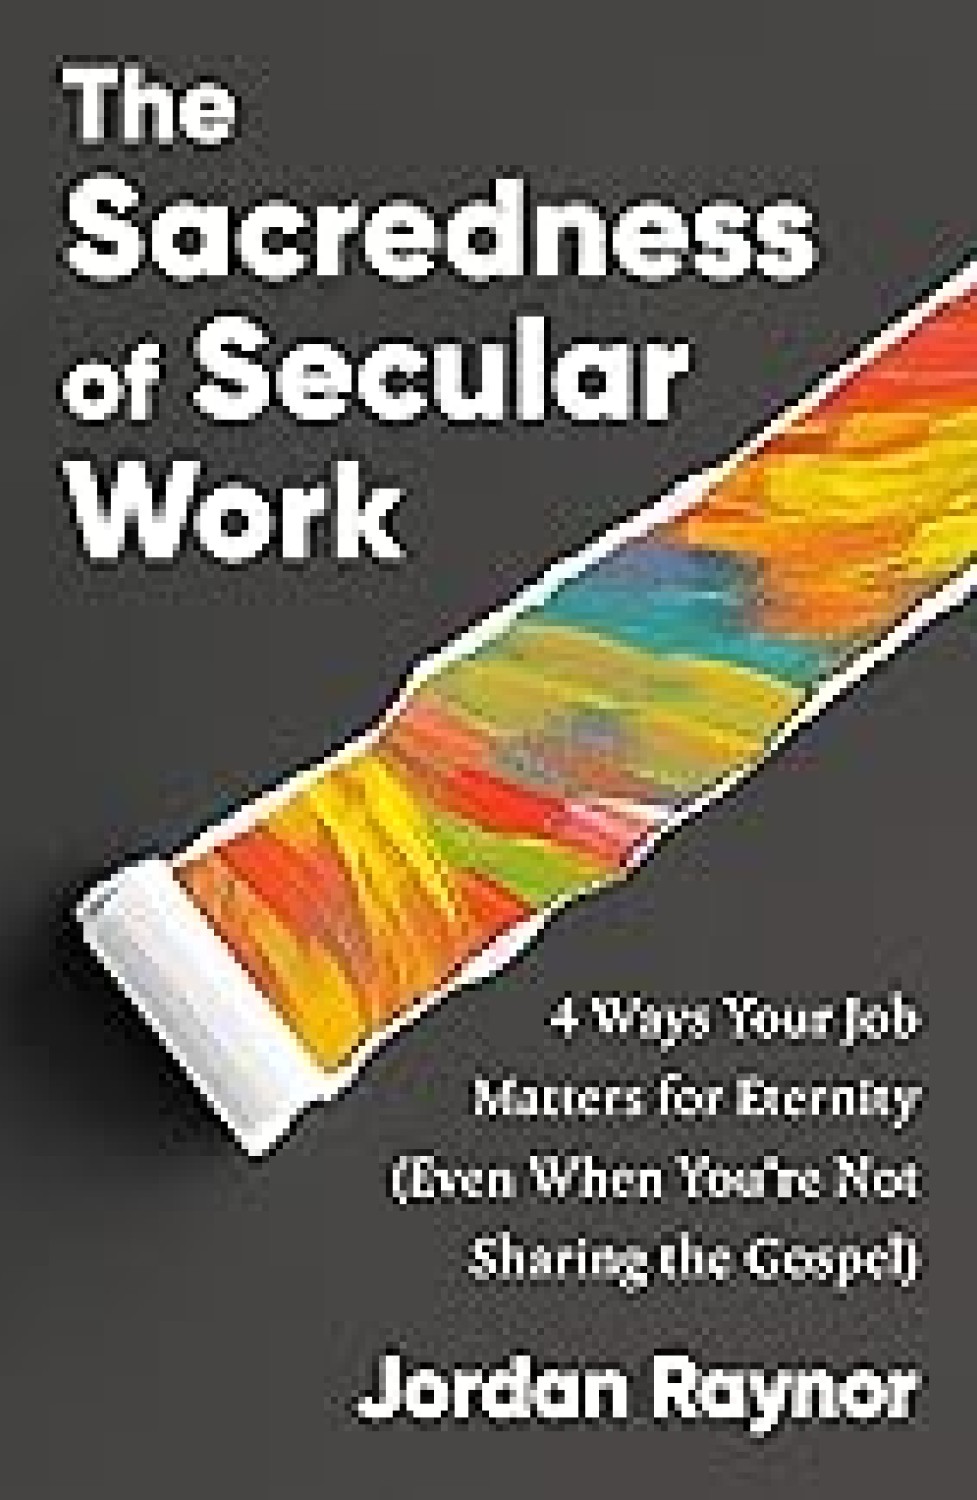 THE SACREDNESS OF SECULAR WORK